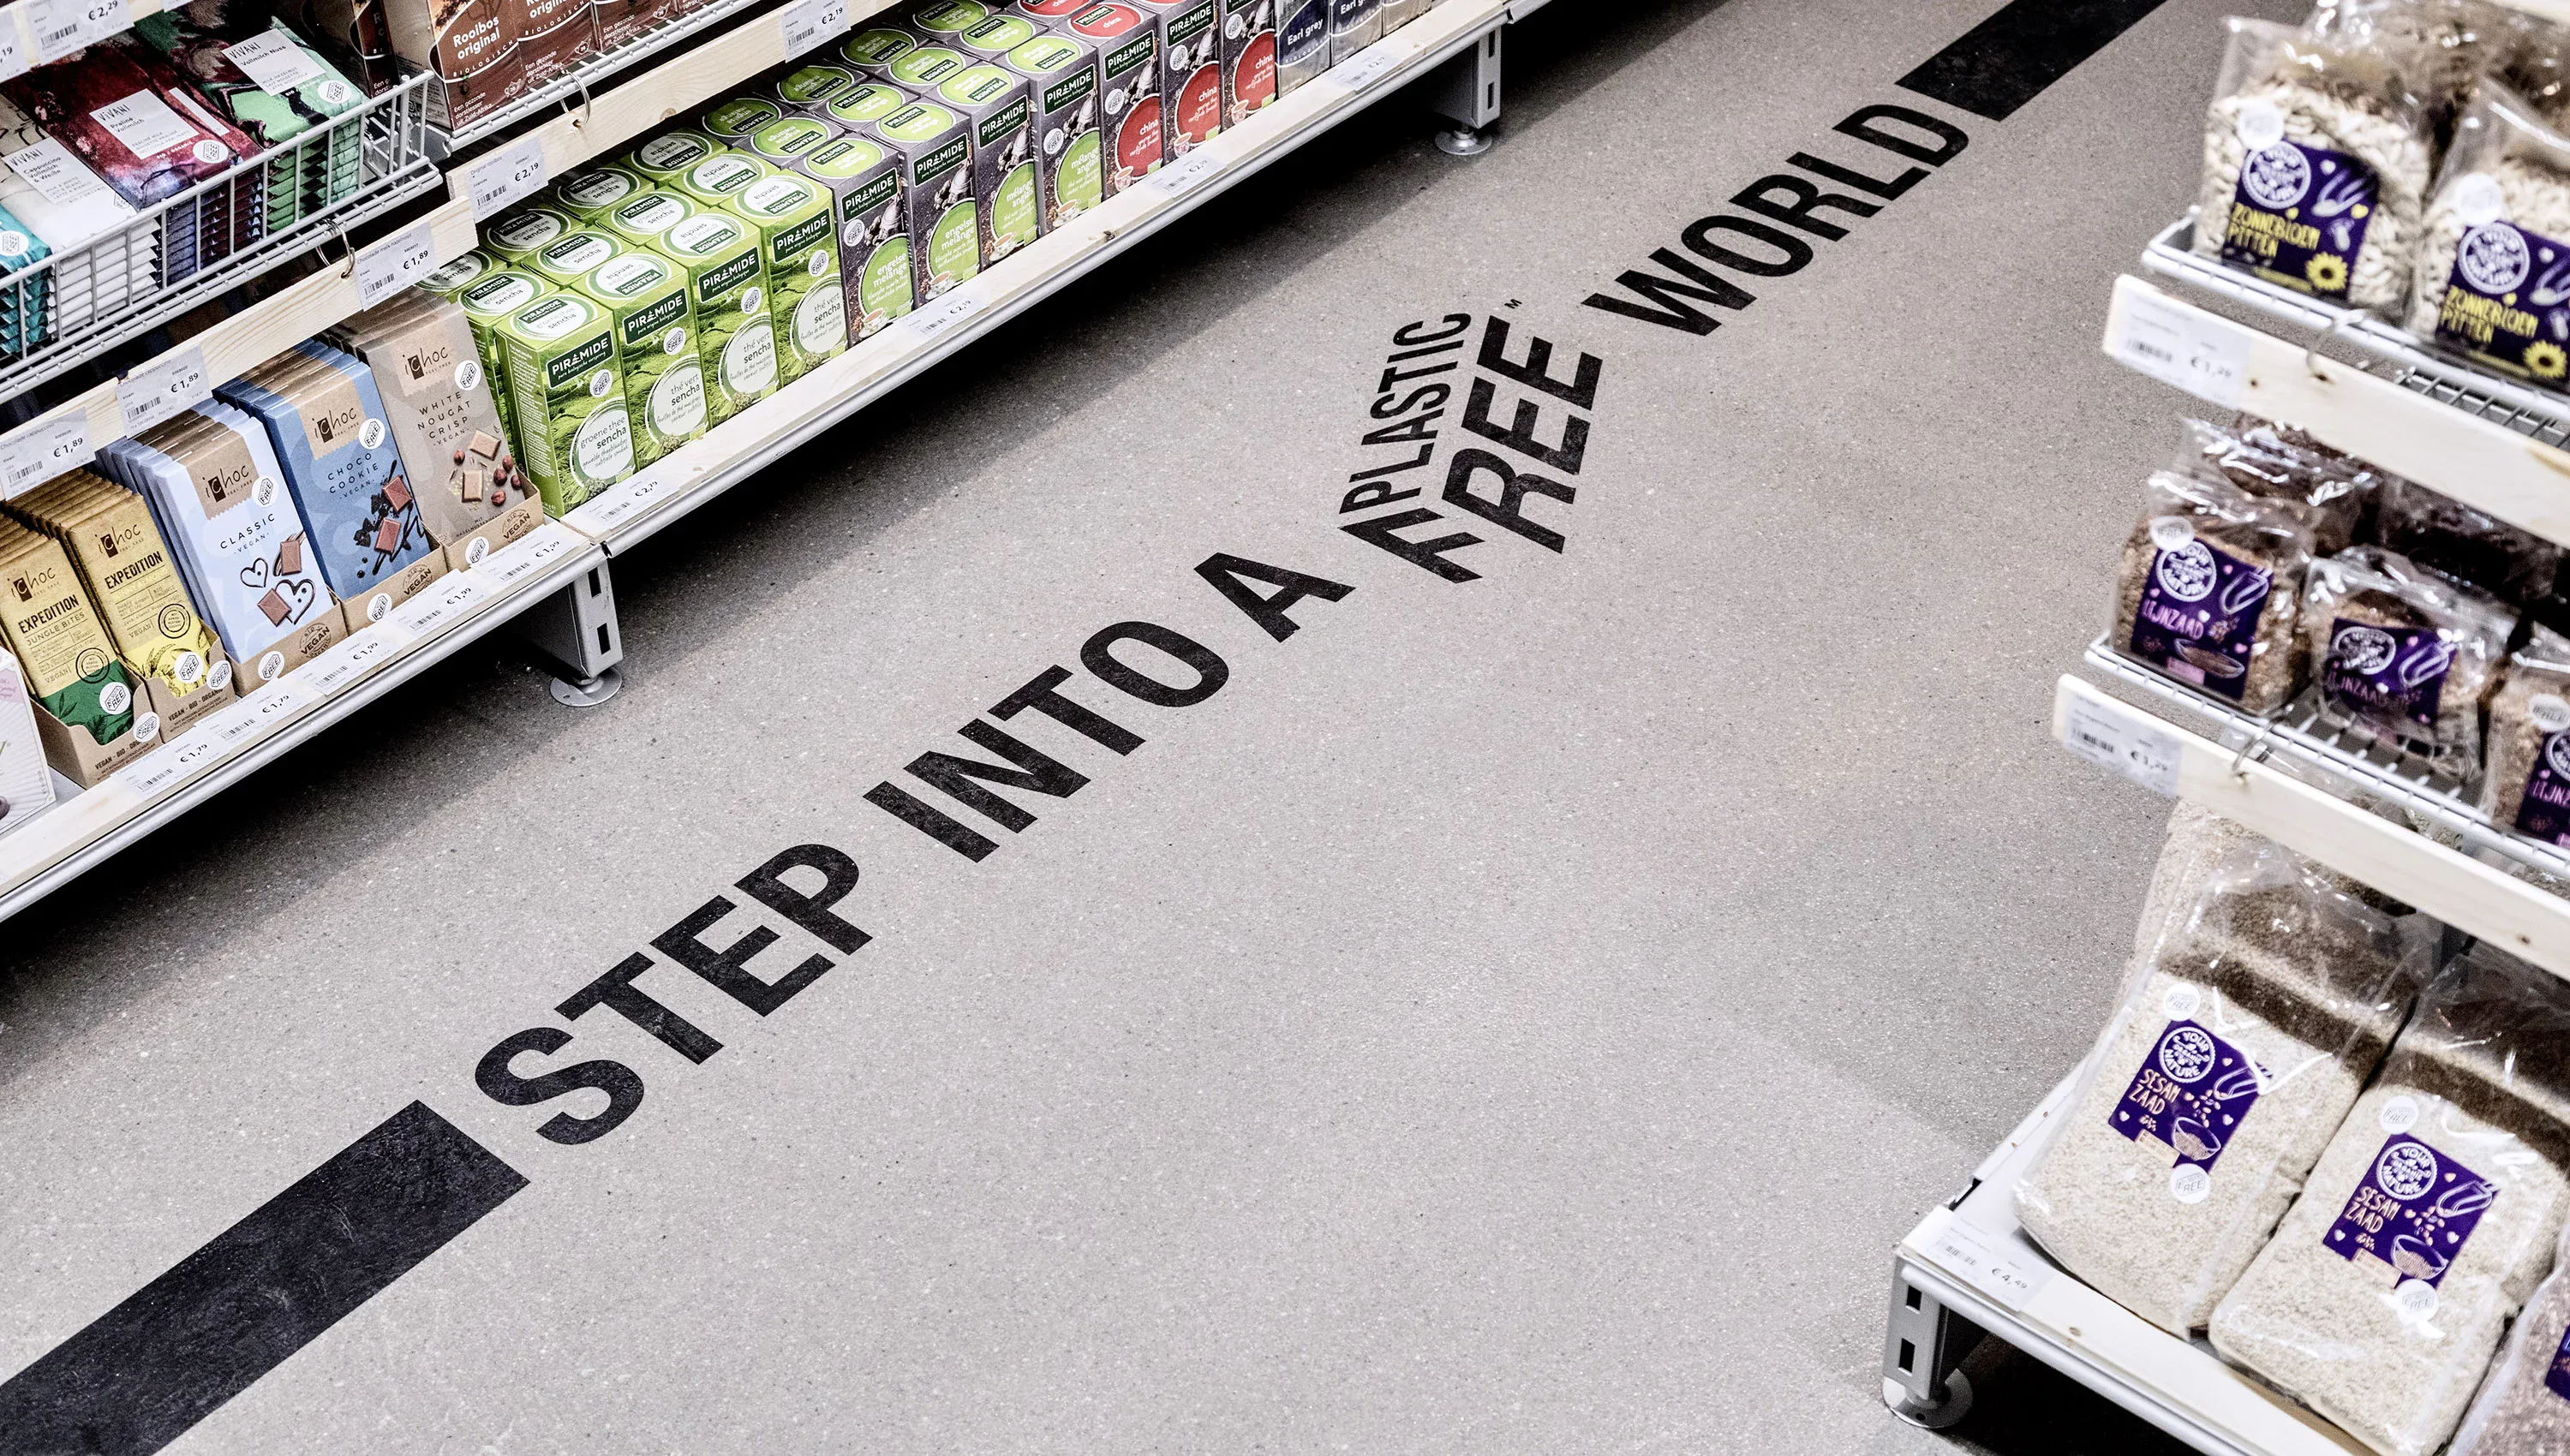 Supermercados implementan pasillos libres de plastico